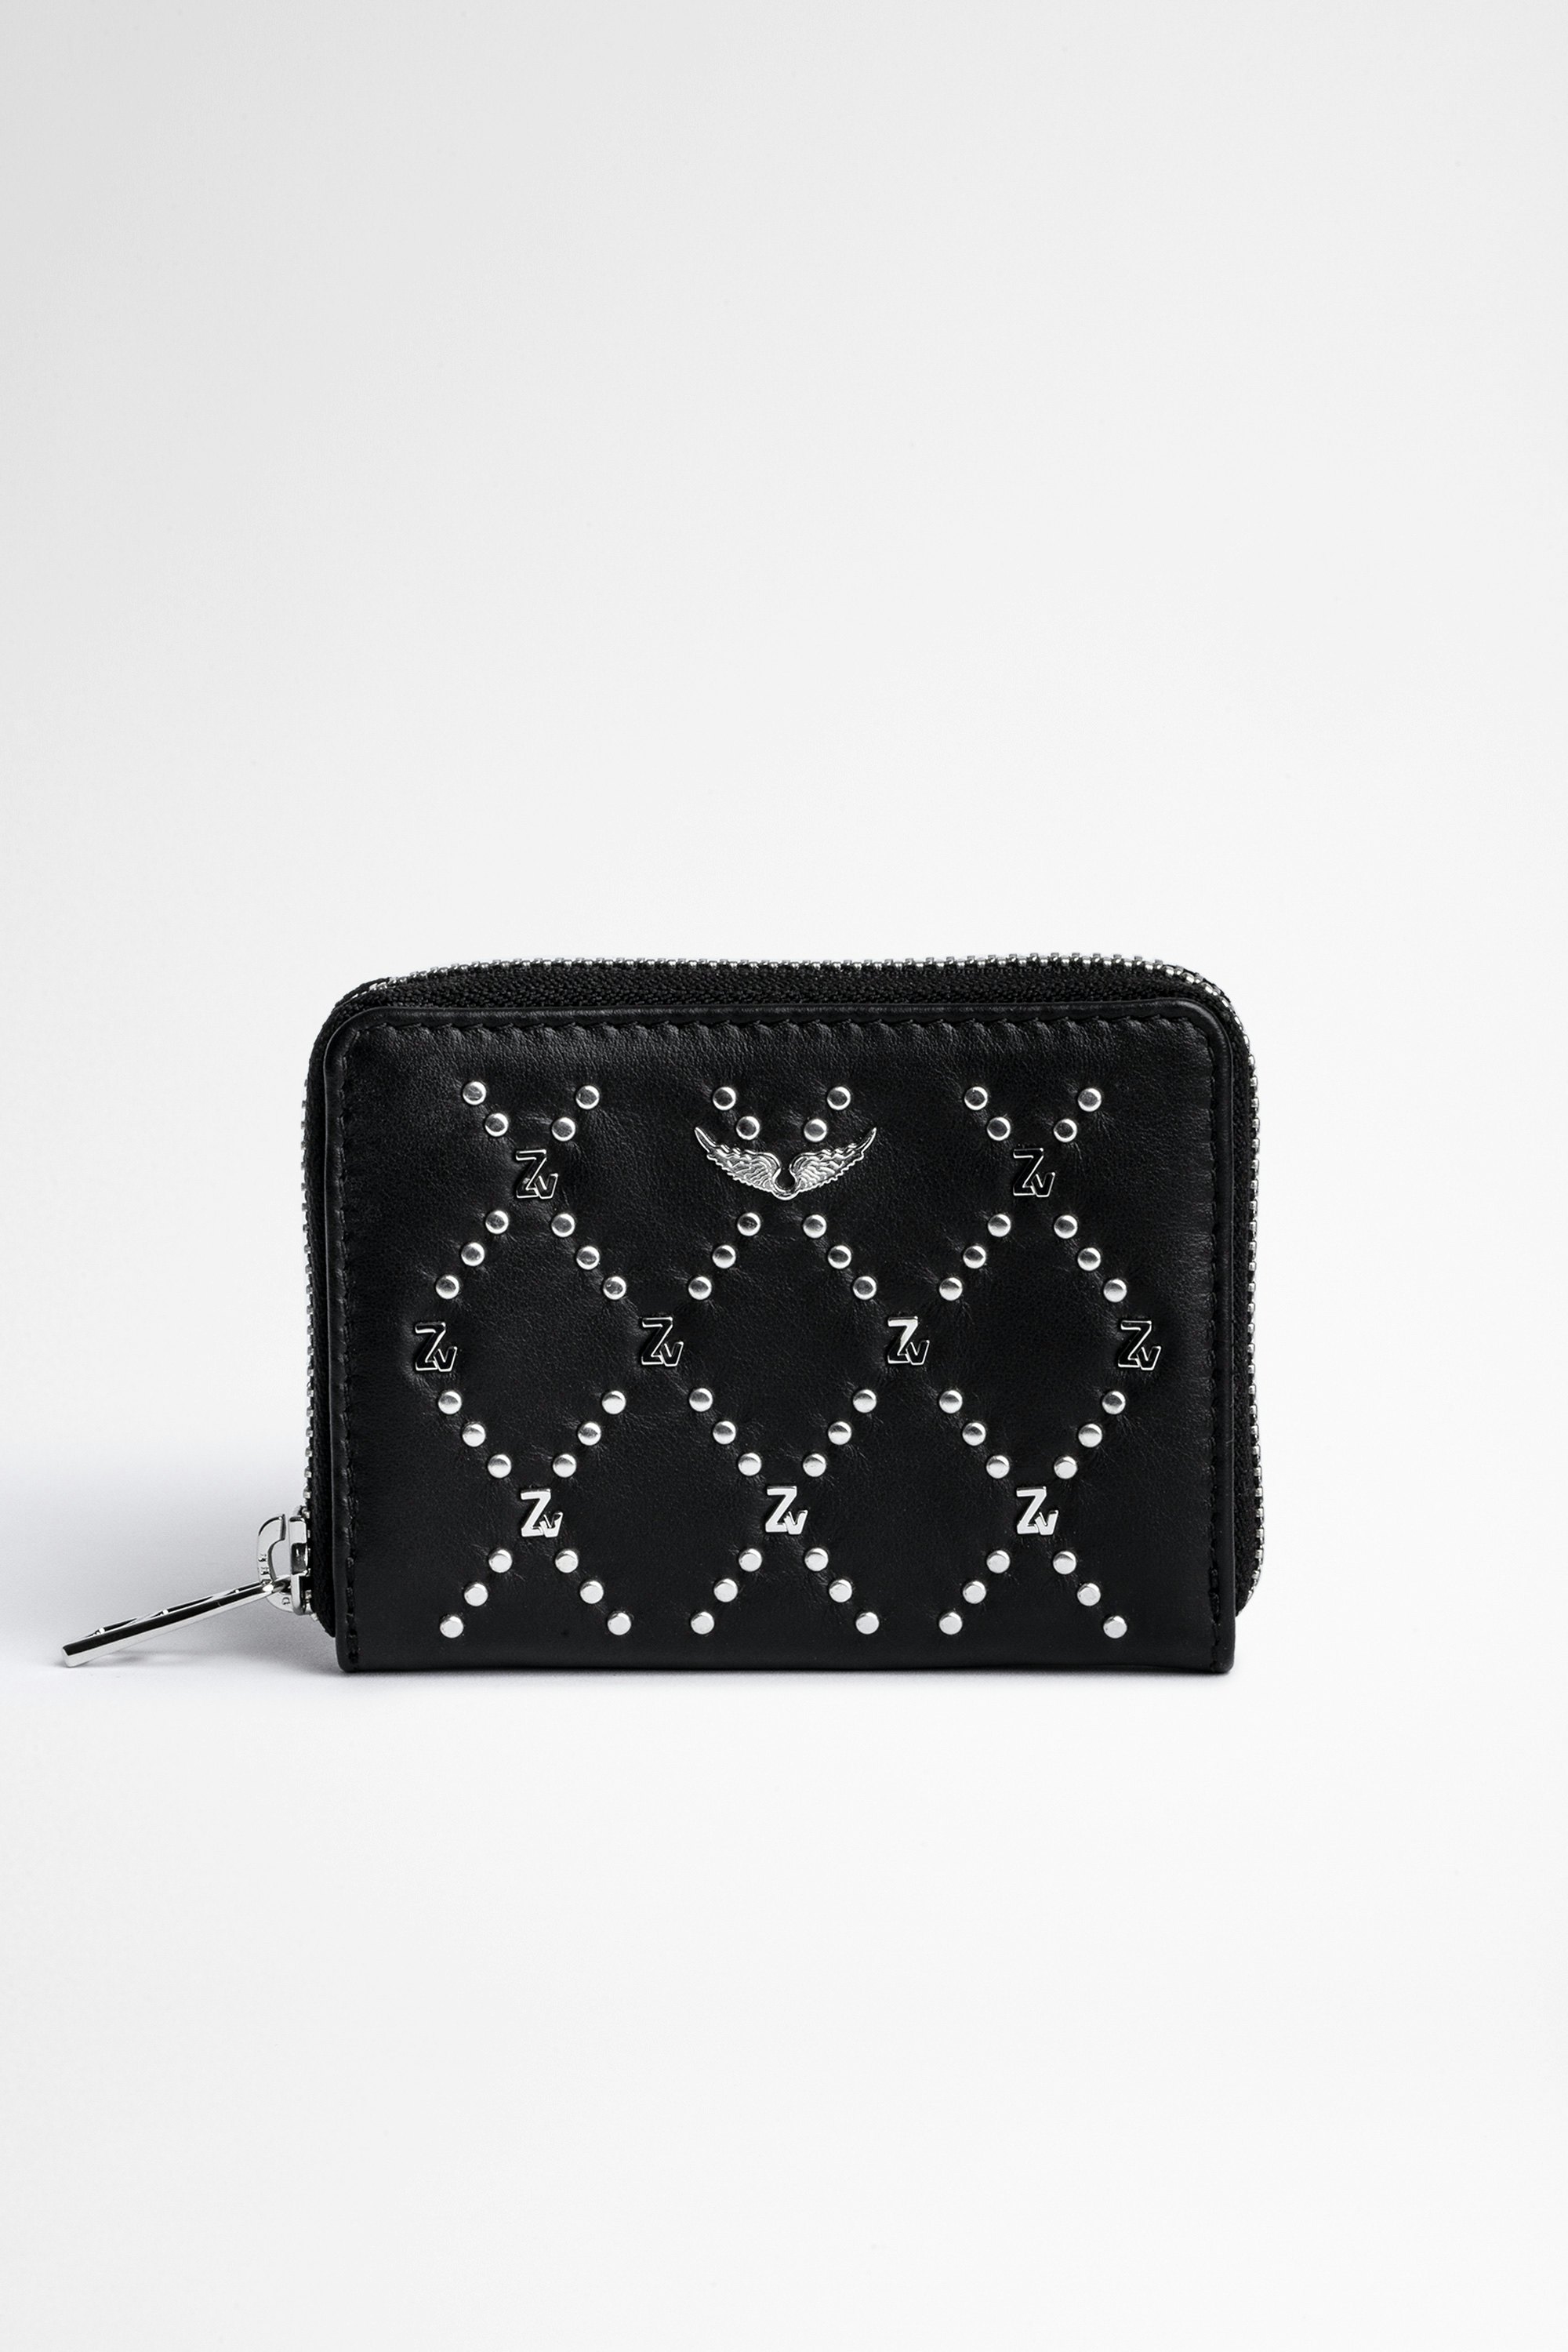 ZV Mini 財布 Women's black leather studded wallet